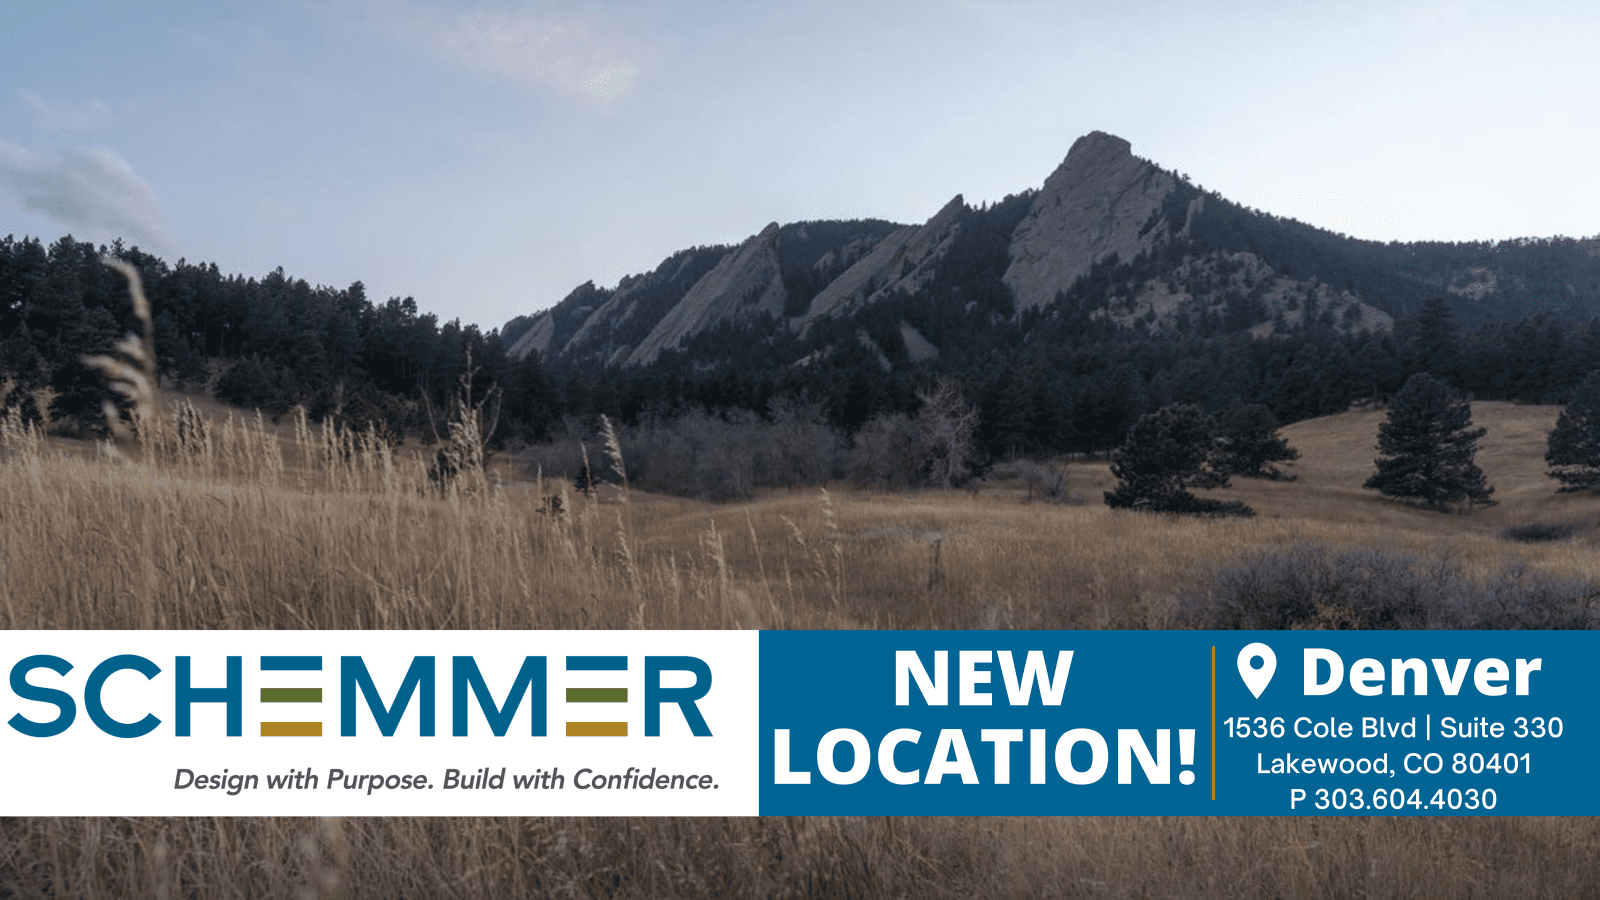 Schemmer Opens New Location in Denver, Colorado